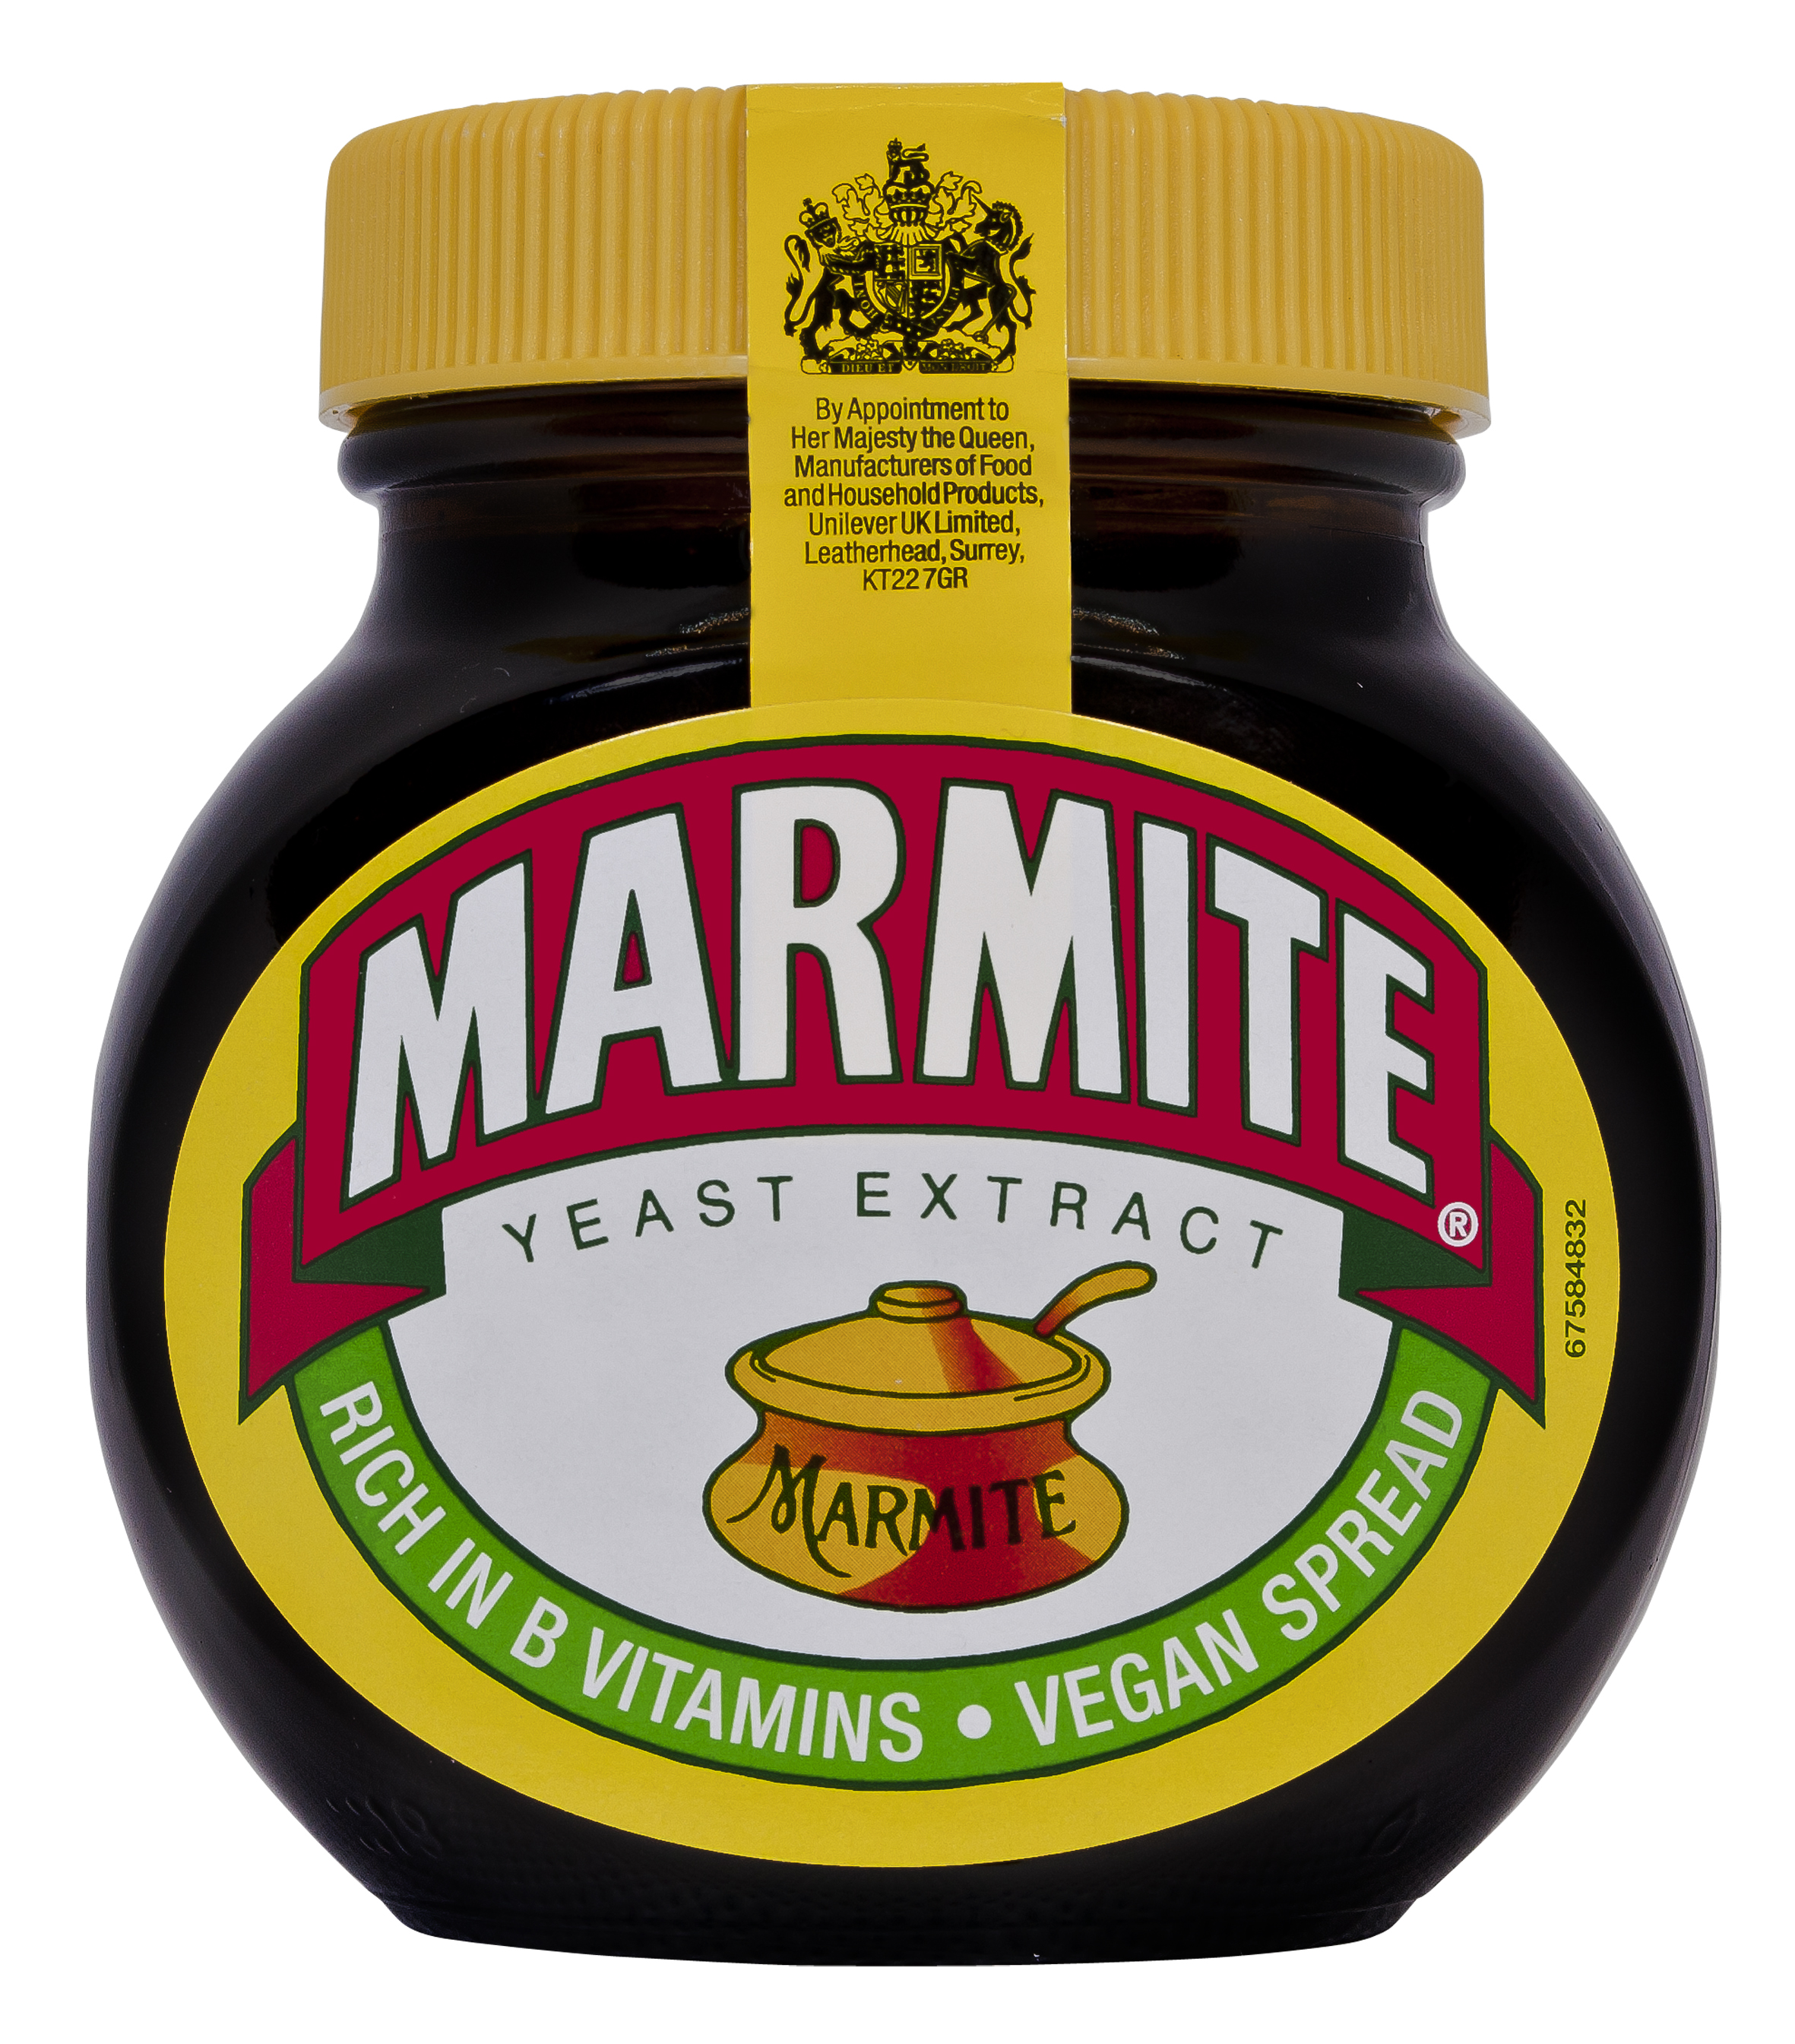  Marmite